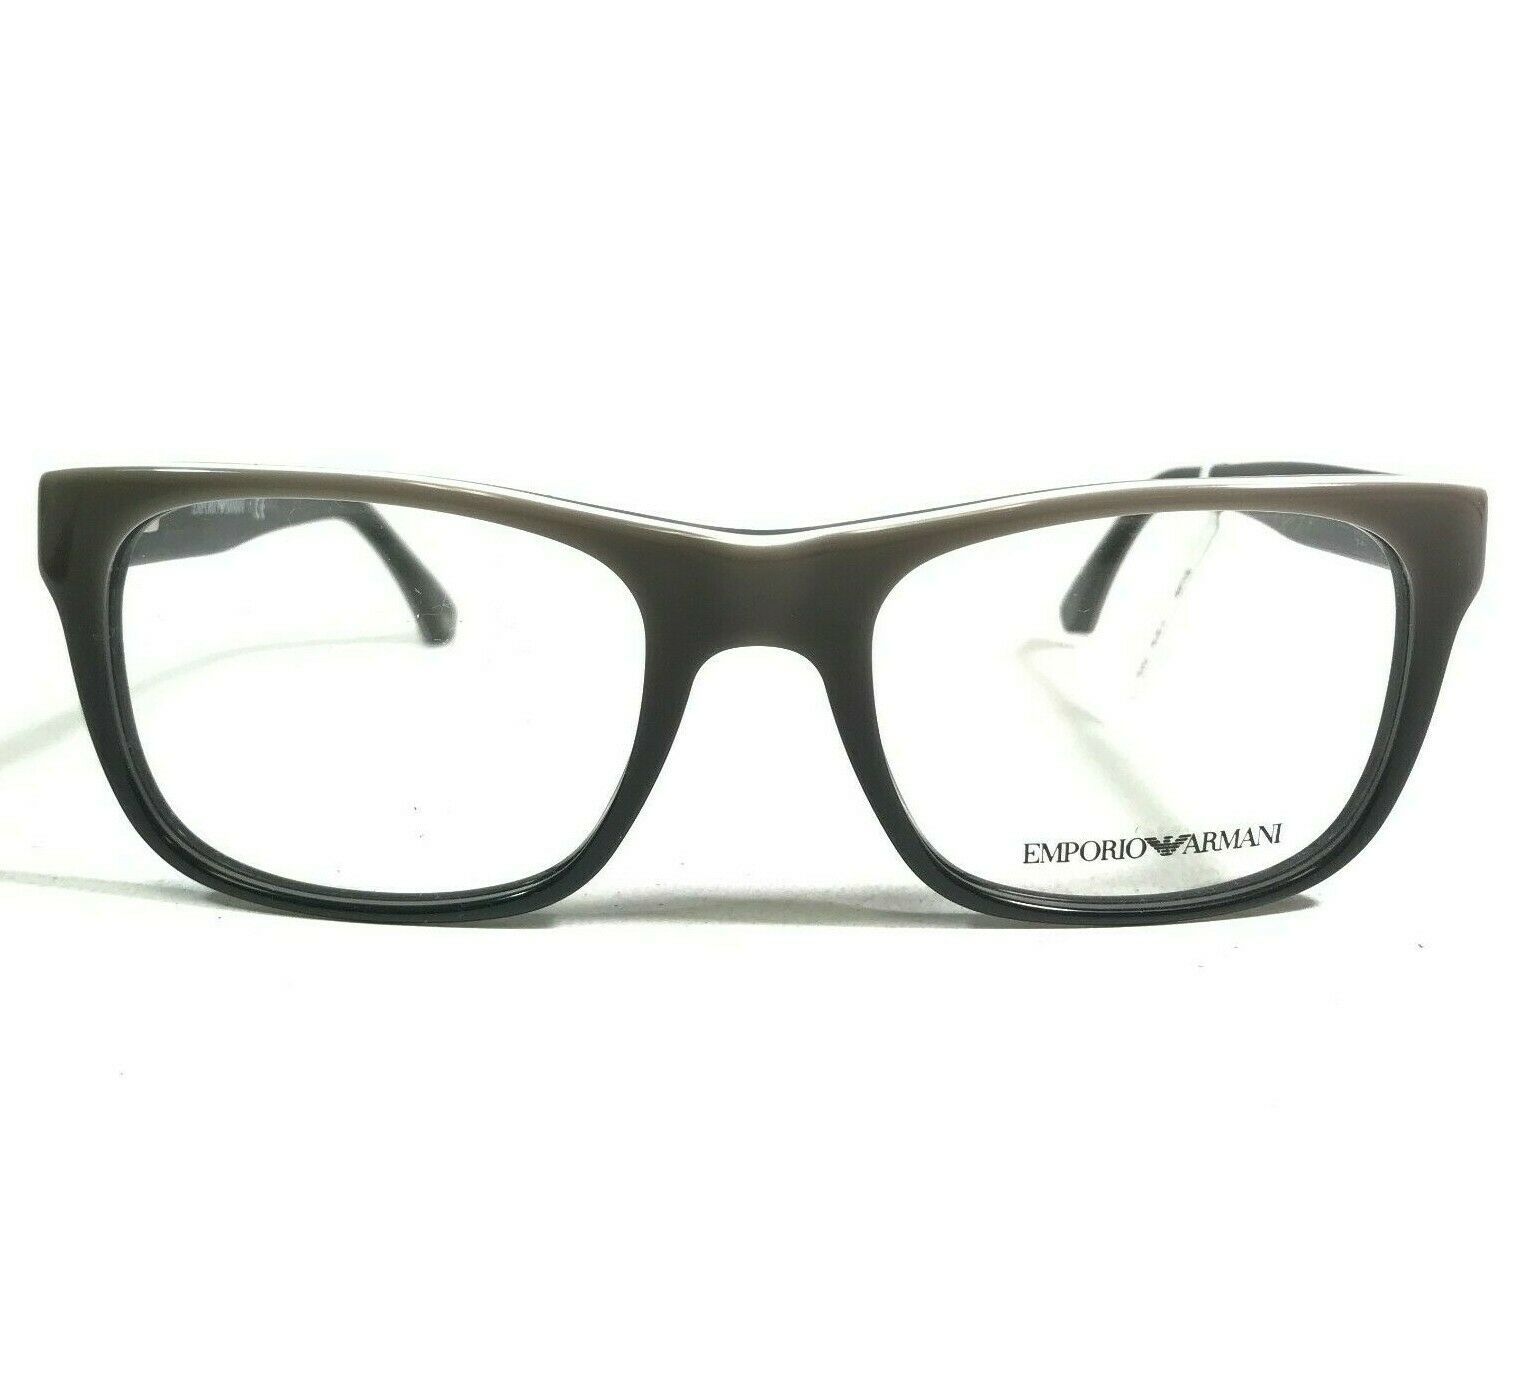 Primary image for Emporio Armani Eyeglasses Frames EA3056 5346 Black Grey Square 52-19-140